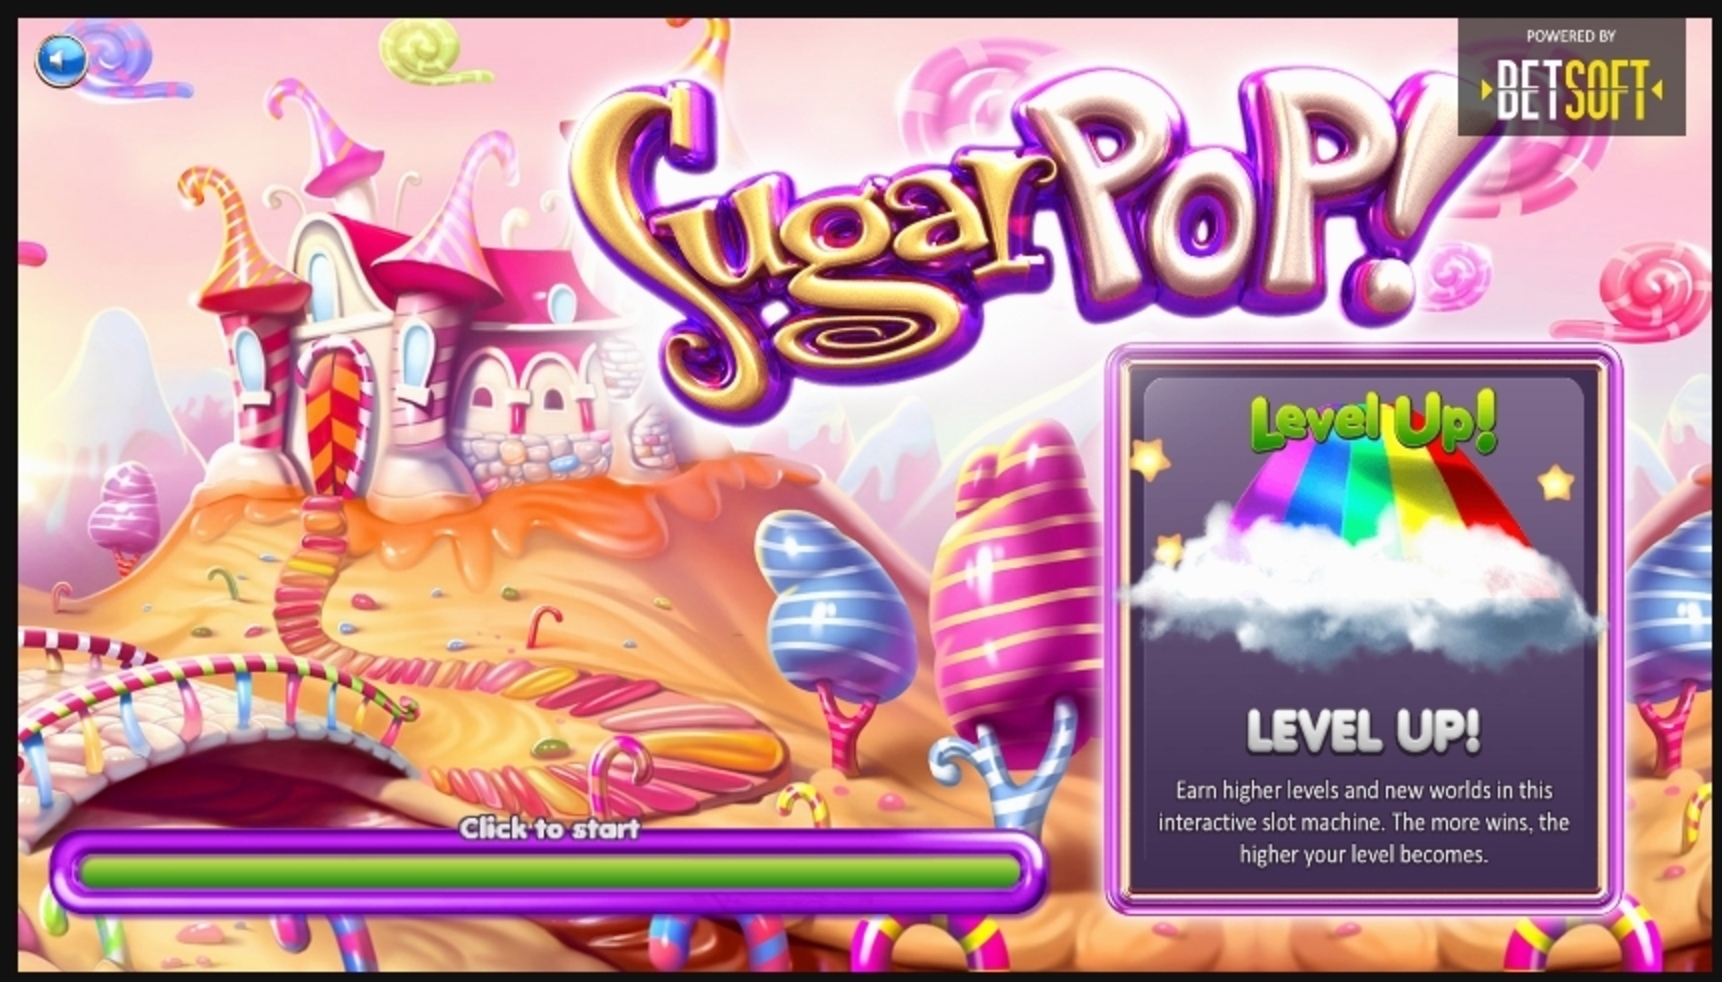 Play SugarPop Free Casino Slot Game by Betsoft